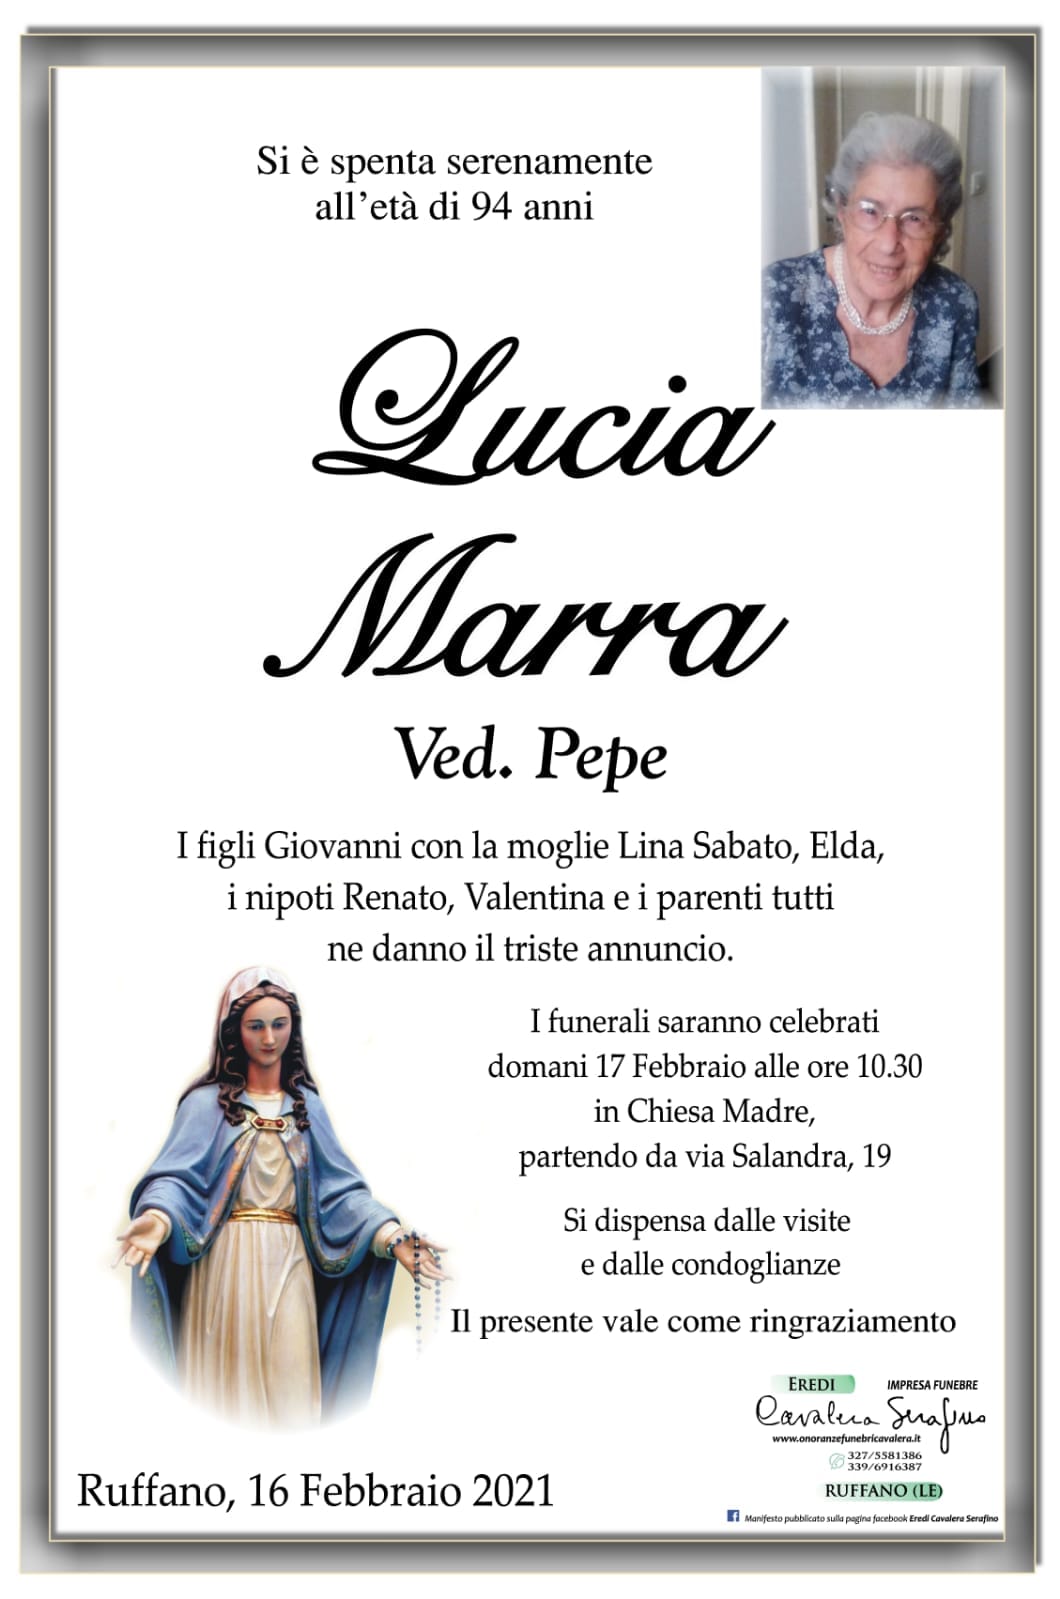 Lucia Marra